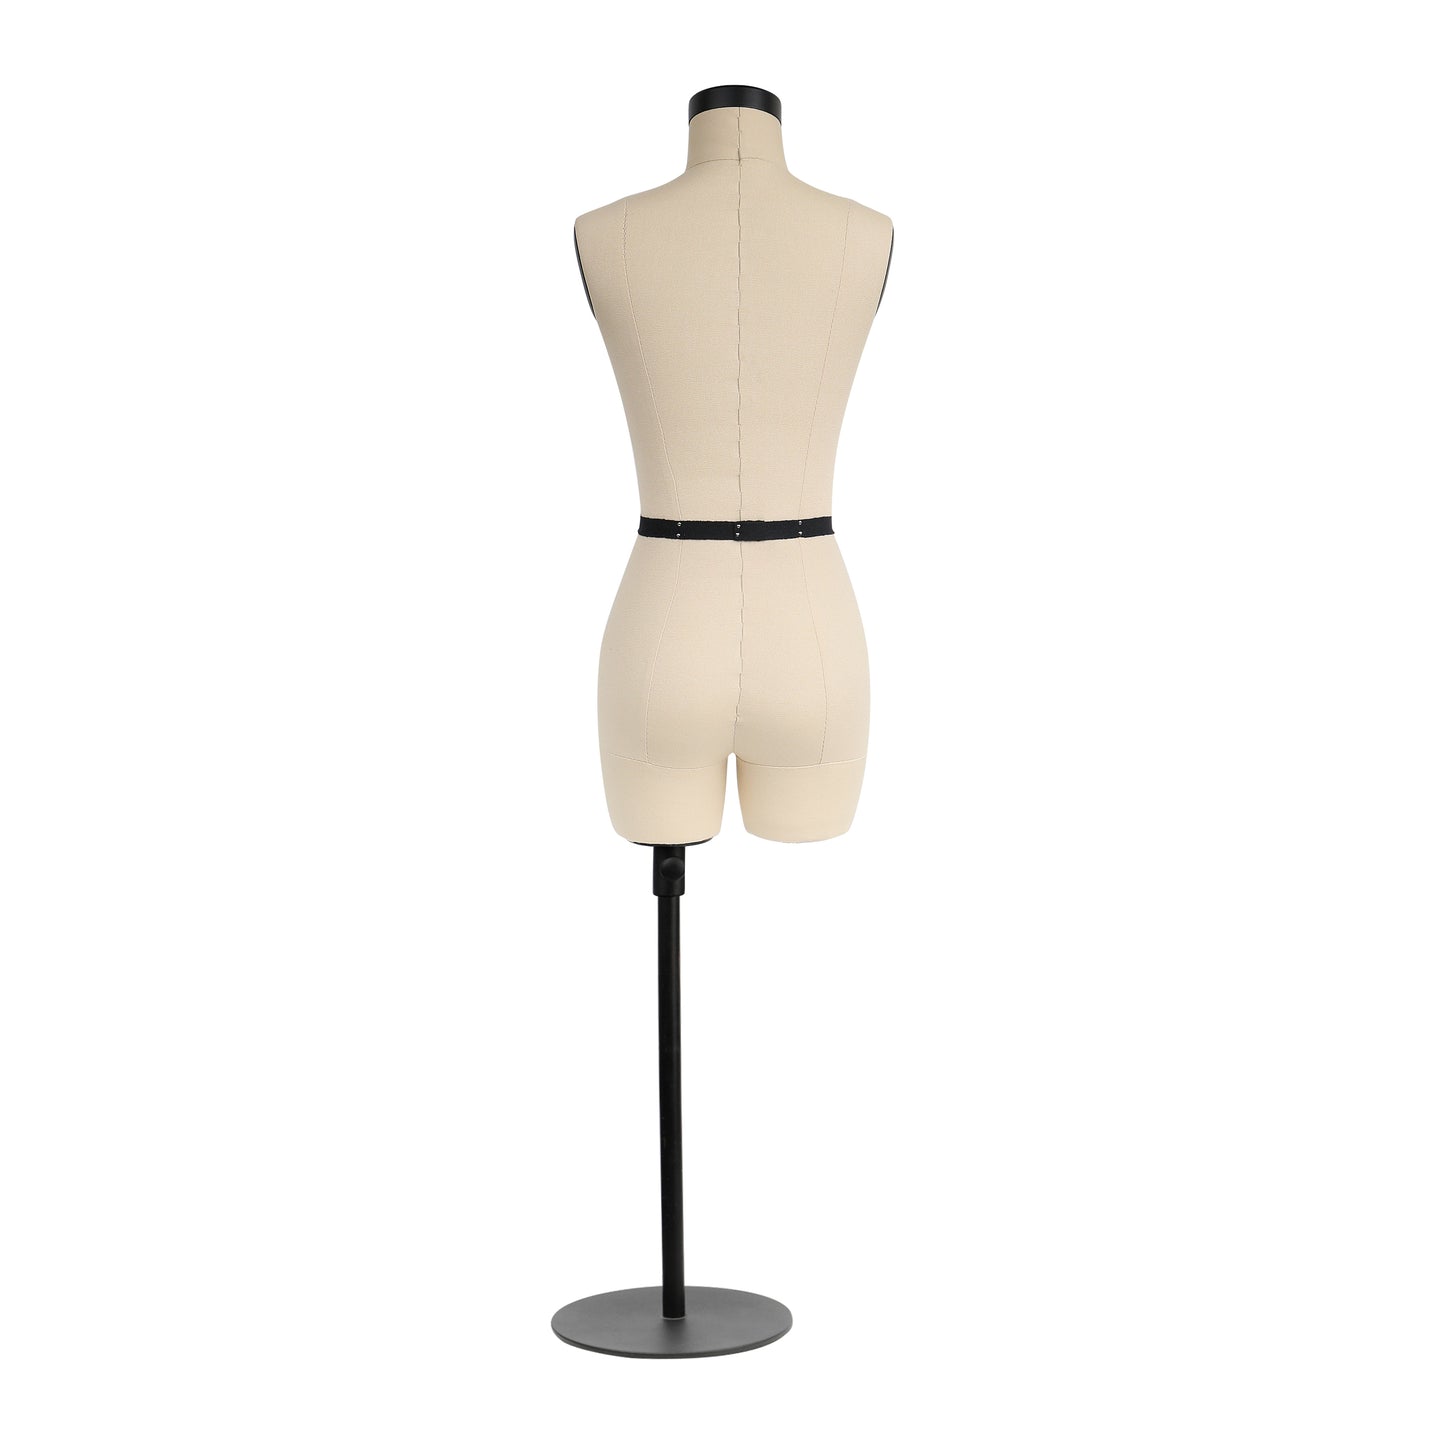 DE-LIANG Size 8 Half scale dress form,DL262 mini sewing tailor fitting mannequin dressmaker dummy, female 1/2 miniature Scale couture, NOT ADULT SIZE drap